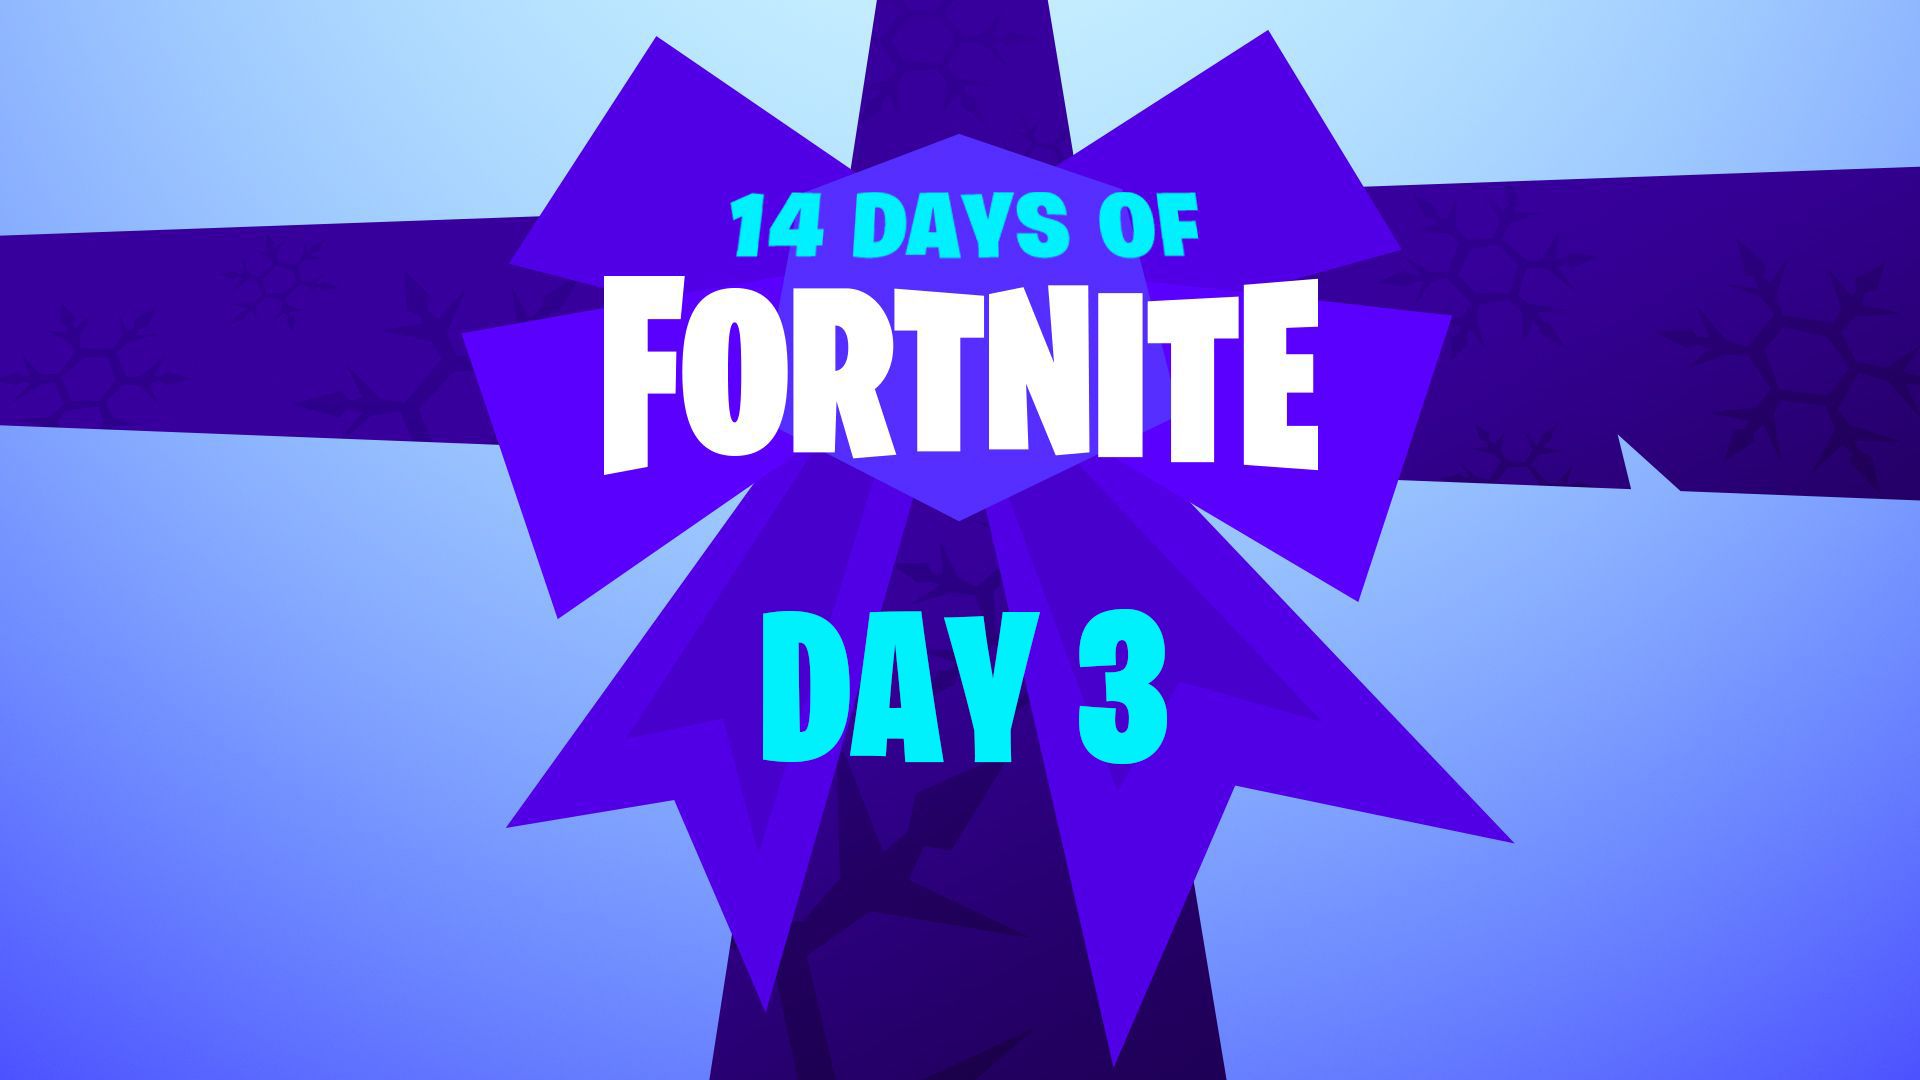 14 Days of Fortnite - Day 3 challenge & reward